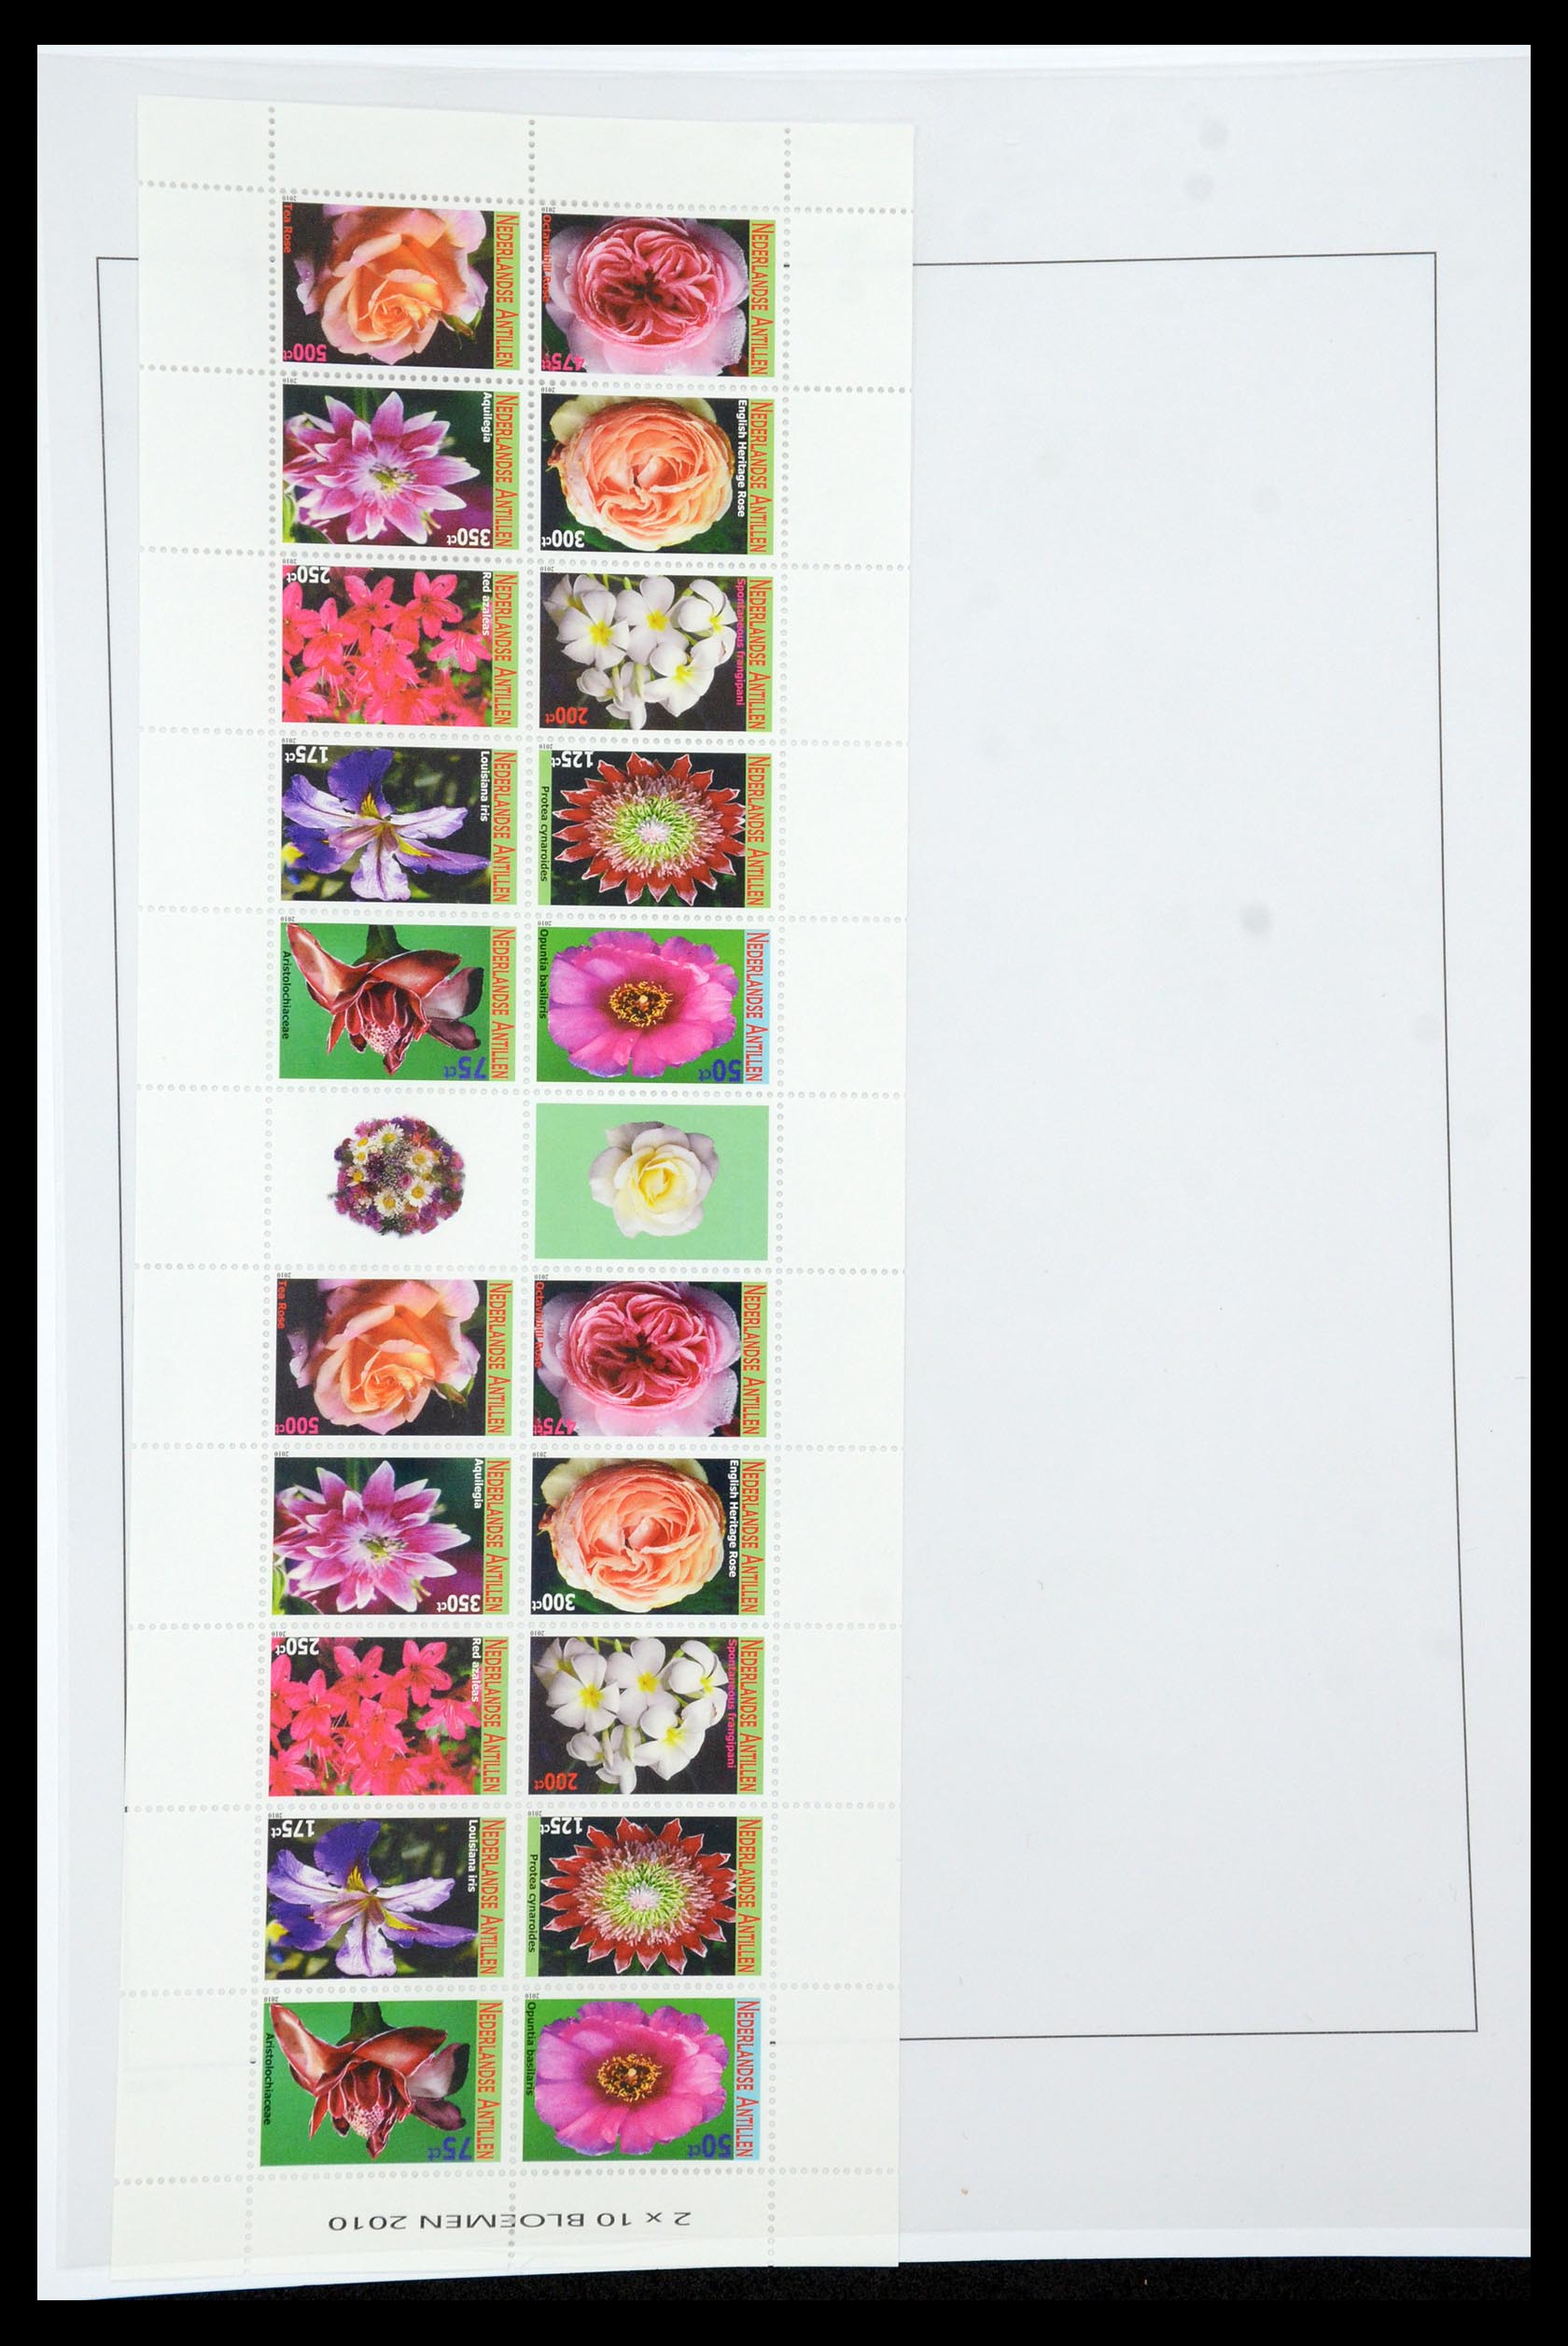 36393 266 - Stamp collection 36393 Netherlands Antilles 1949-2010.